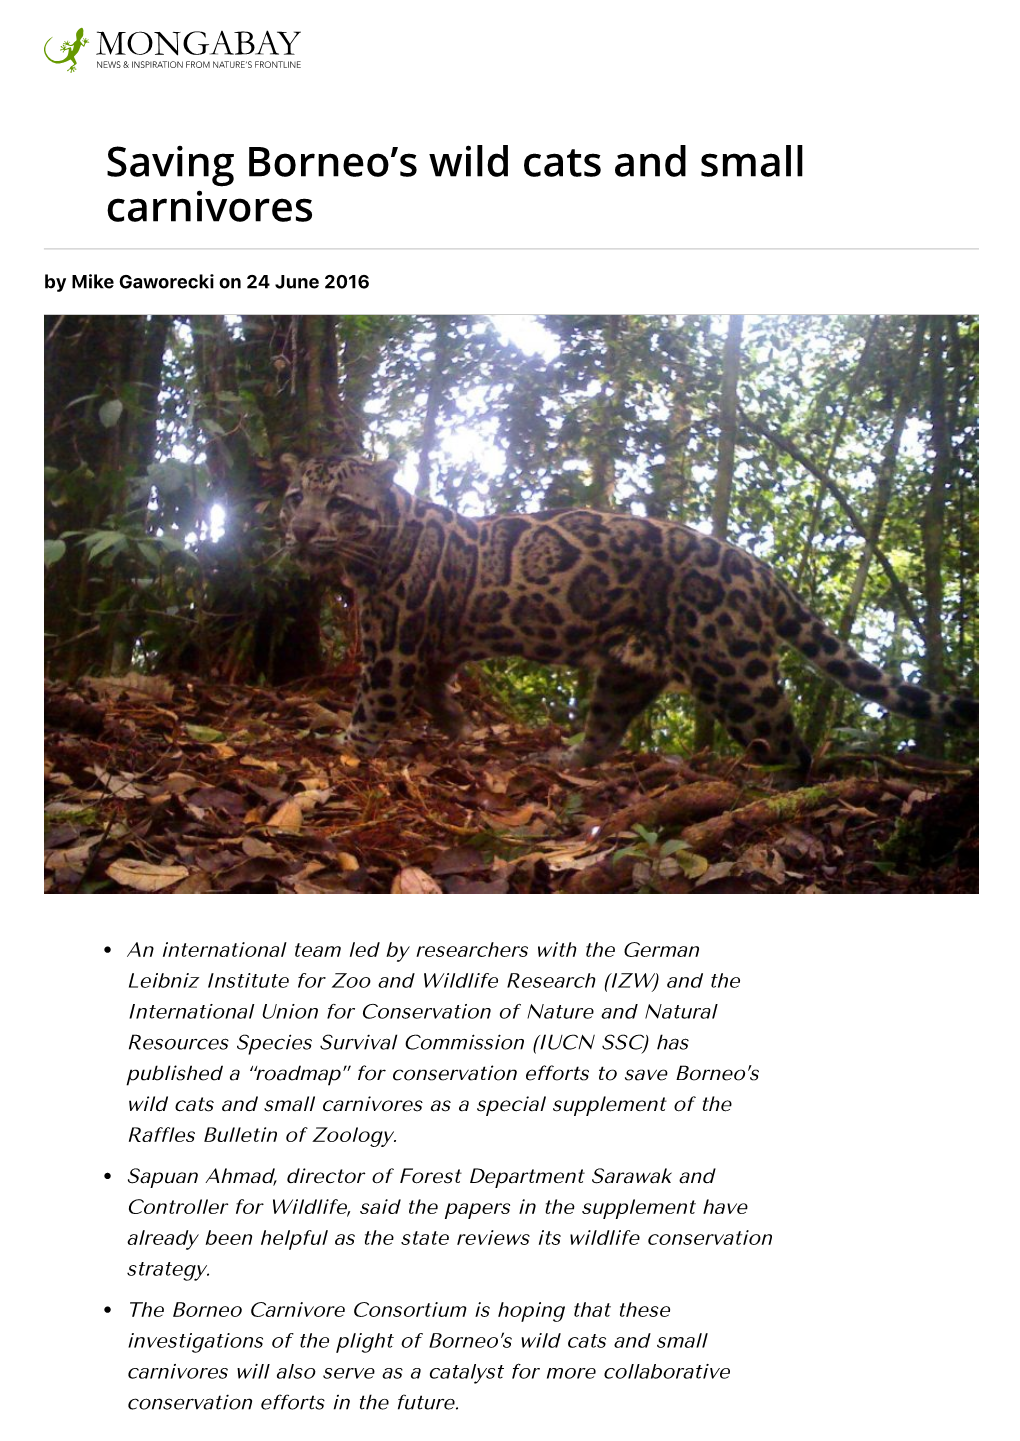 Saving Borneo's Wild Cats and Small Carnivores